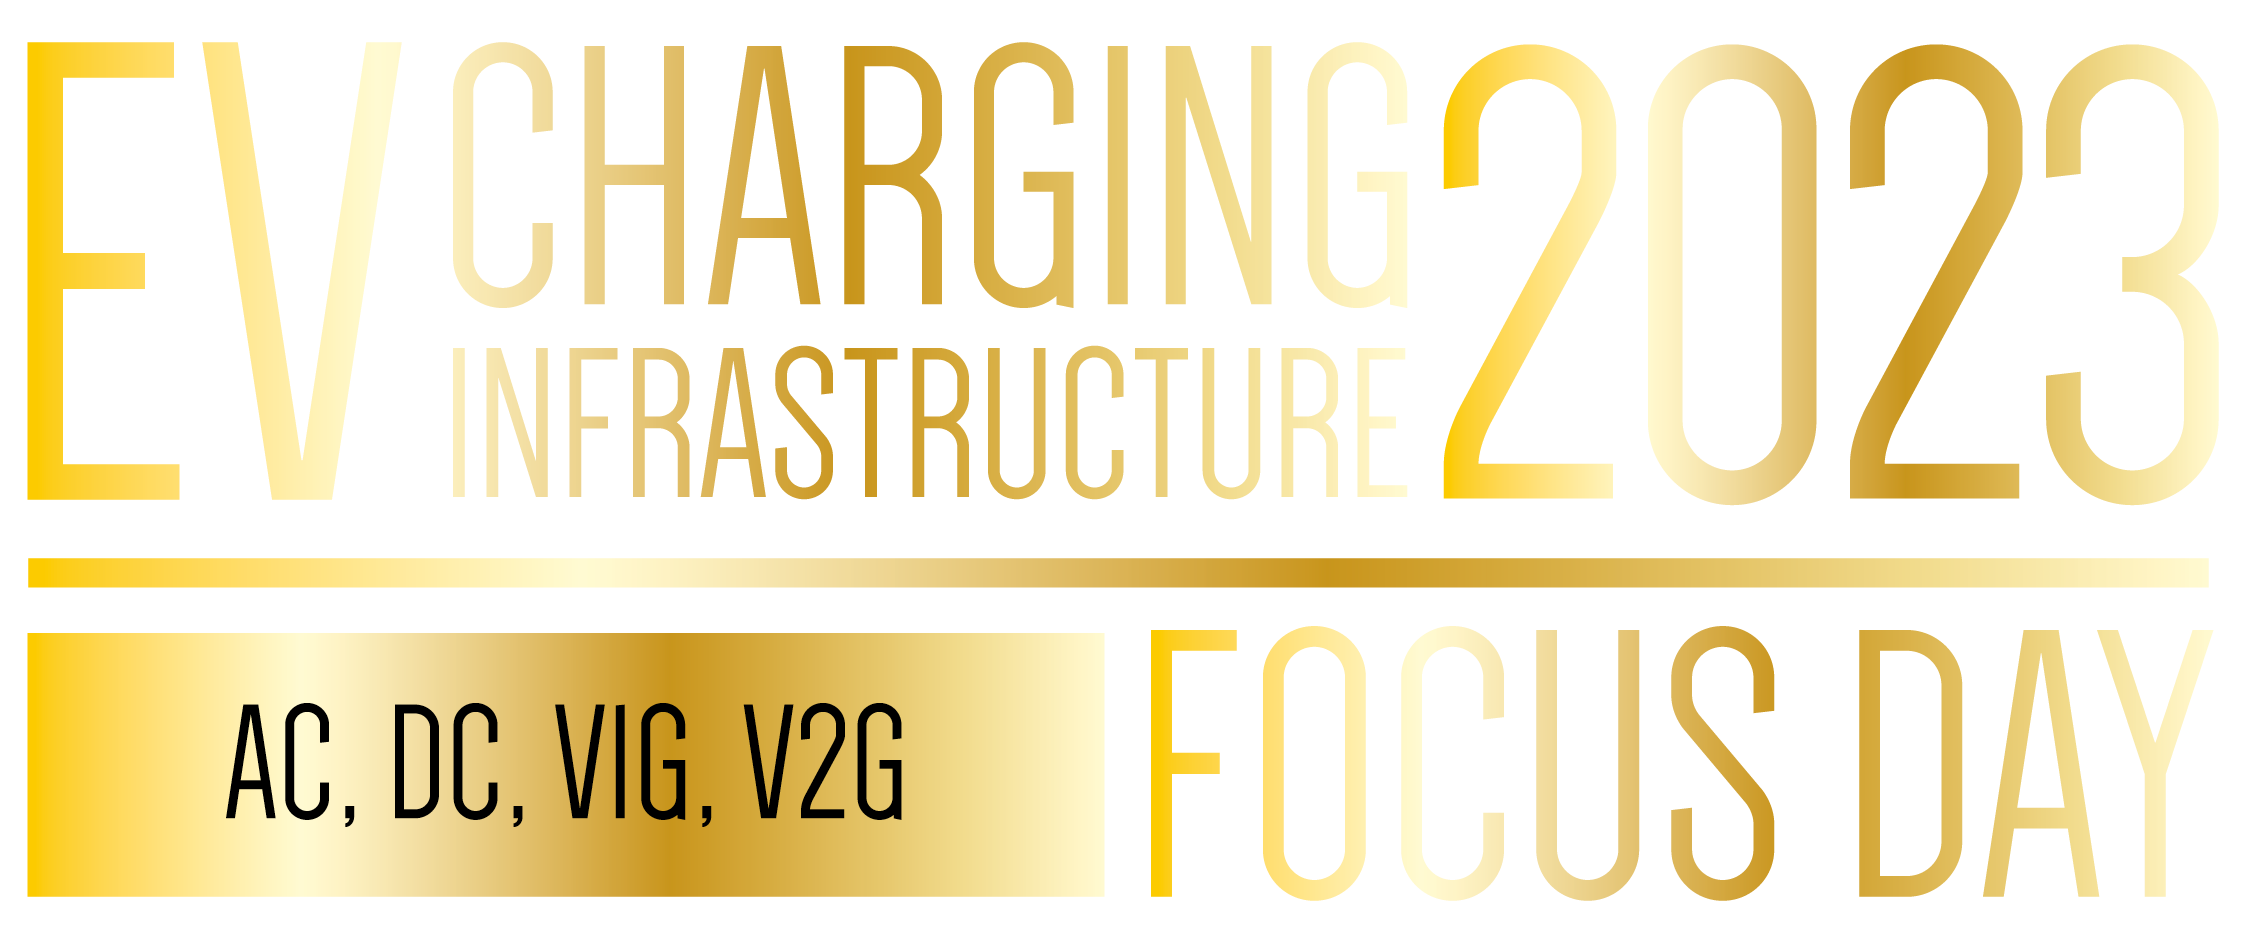 EV Charging Infrastructure Focus Day logo